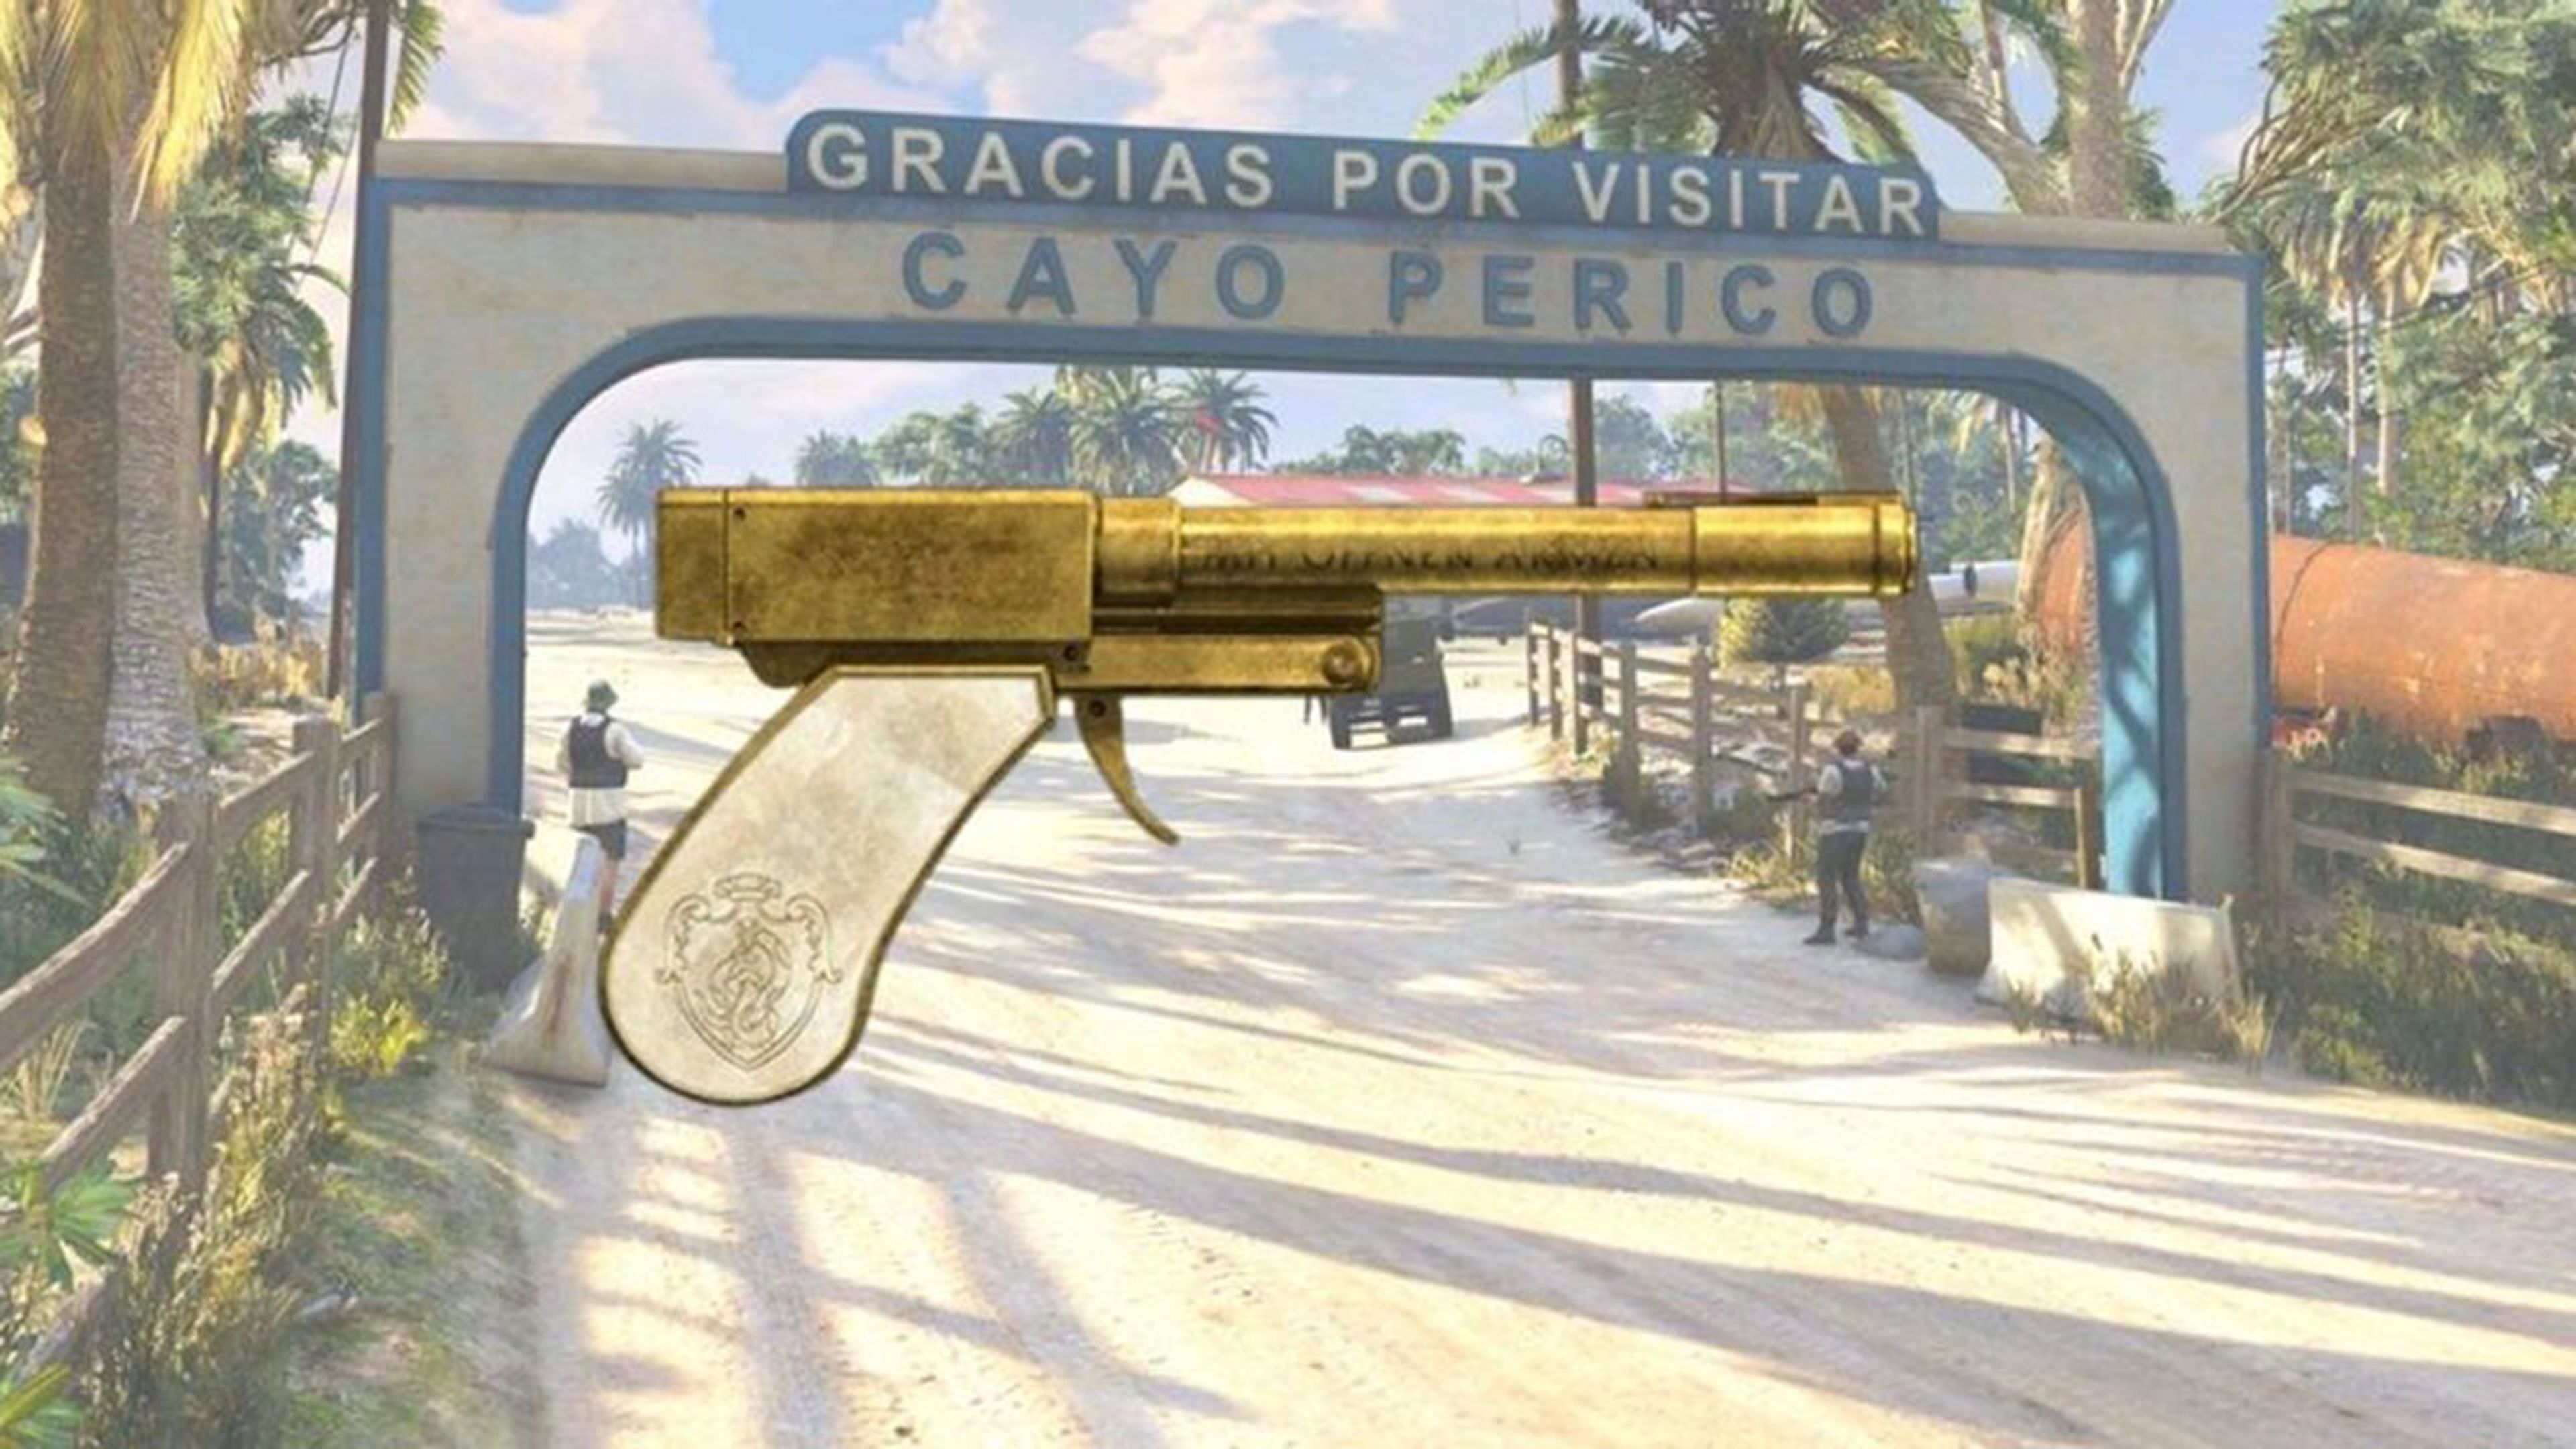 GTA Online Cayo Perico